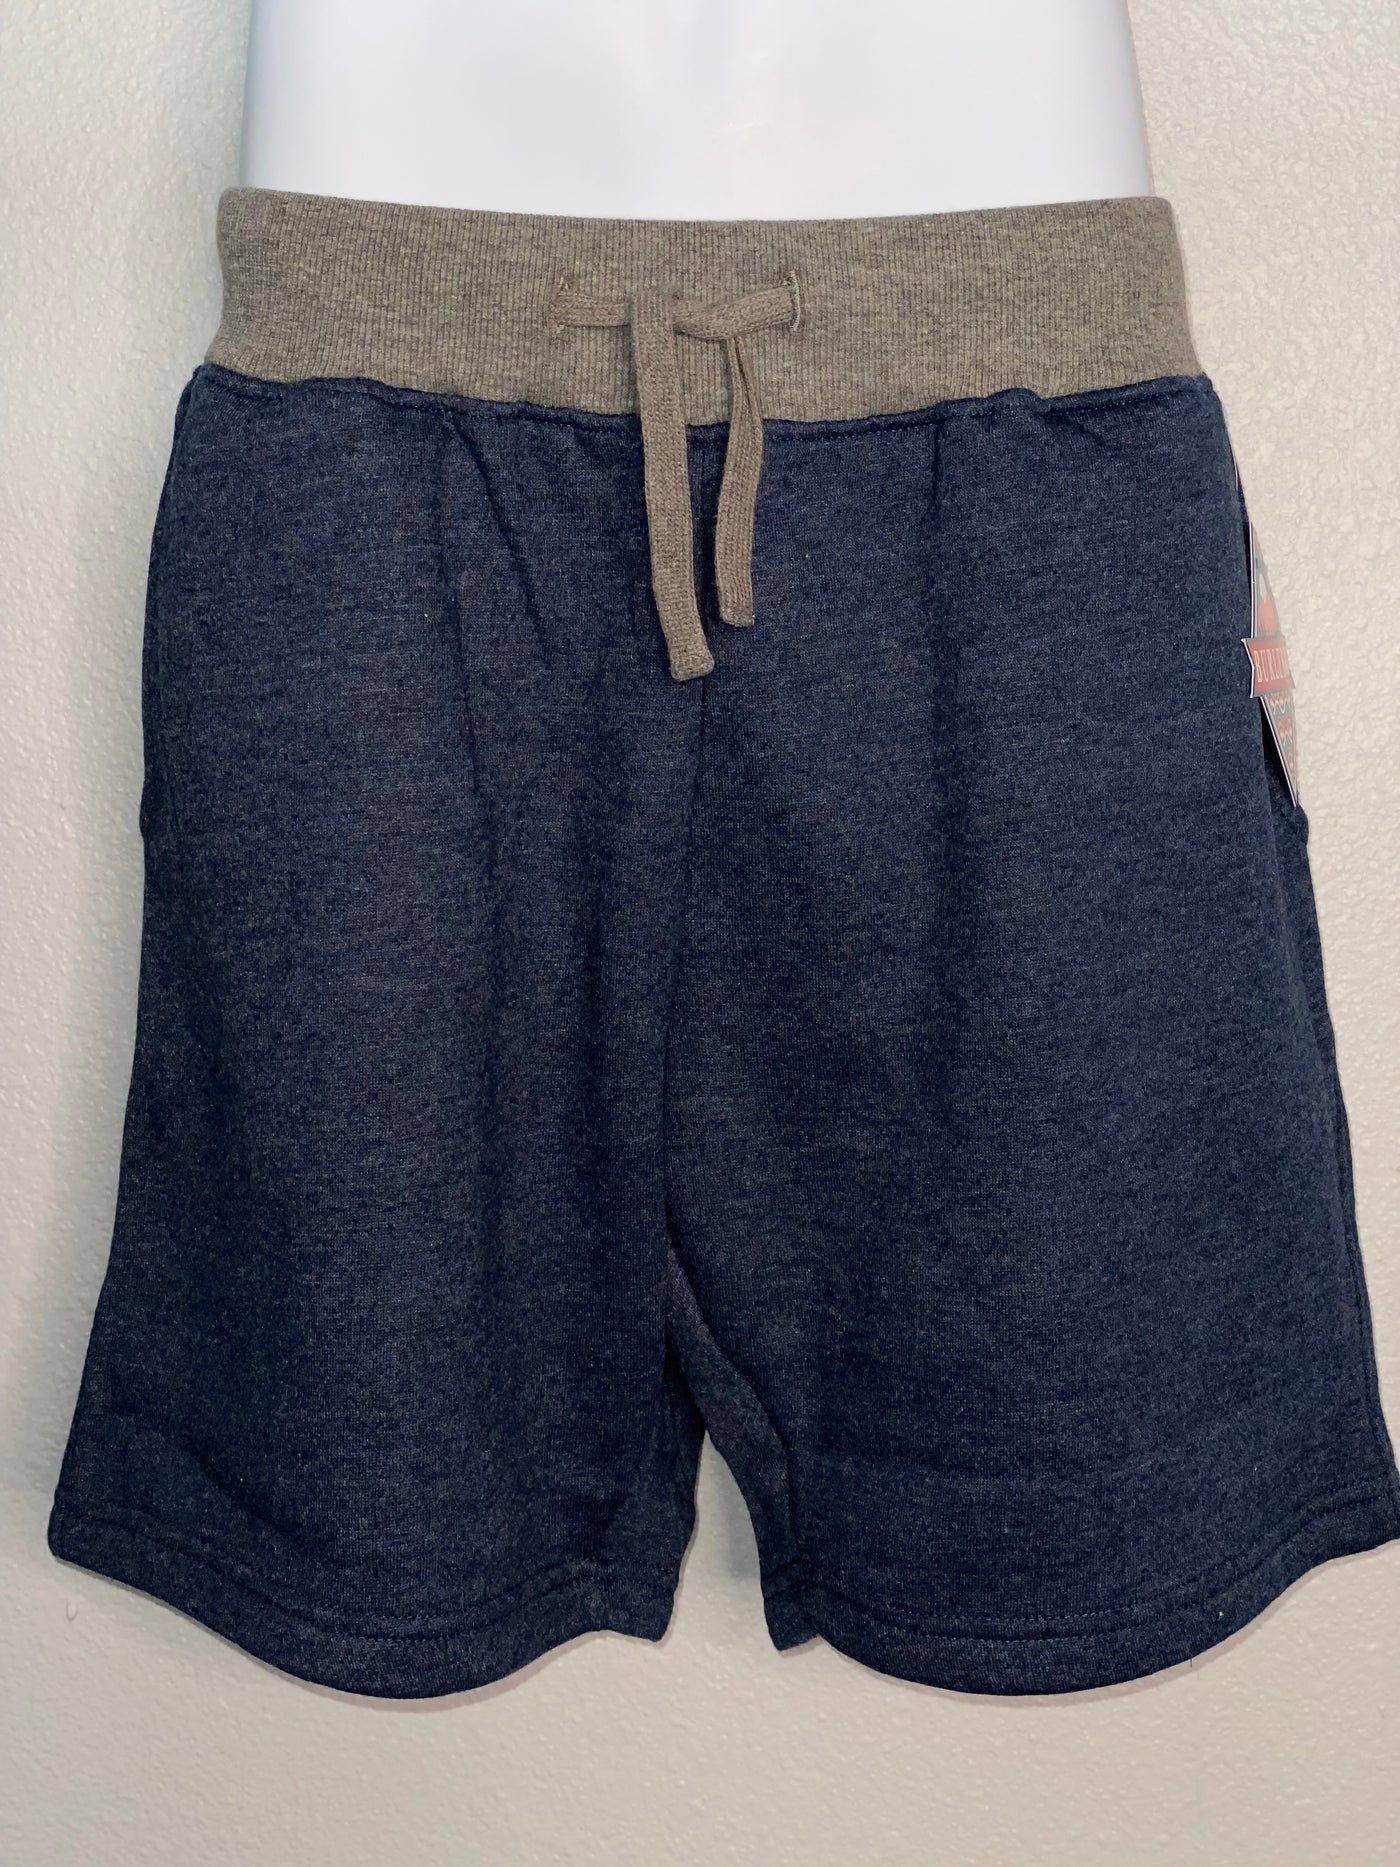 Heather Navy Fleece Mens Shorts with USA Pocket Lining Unisex